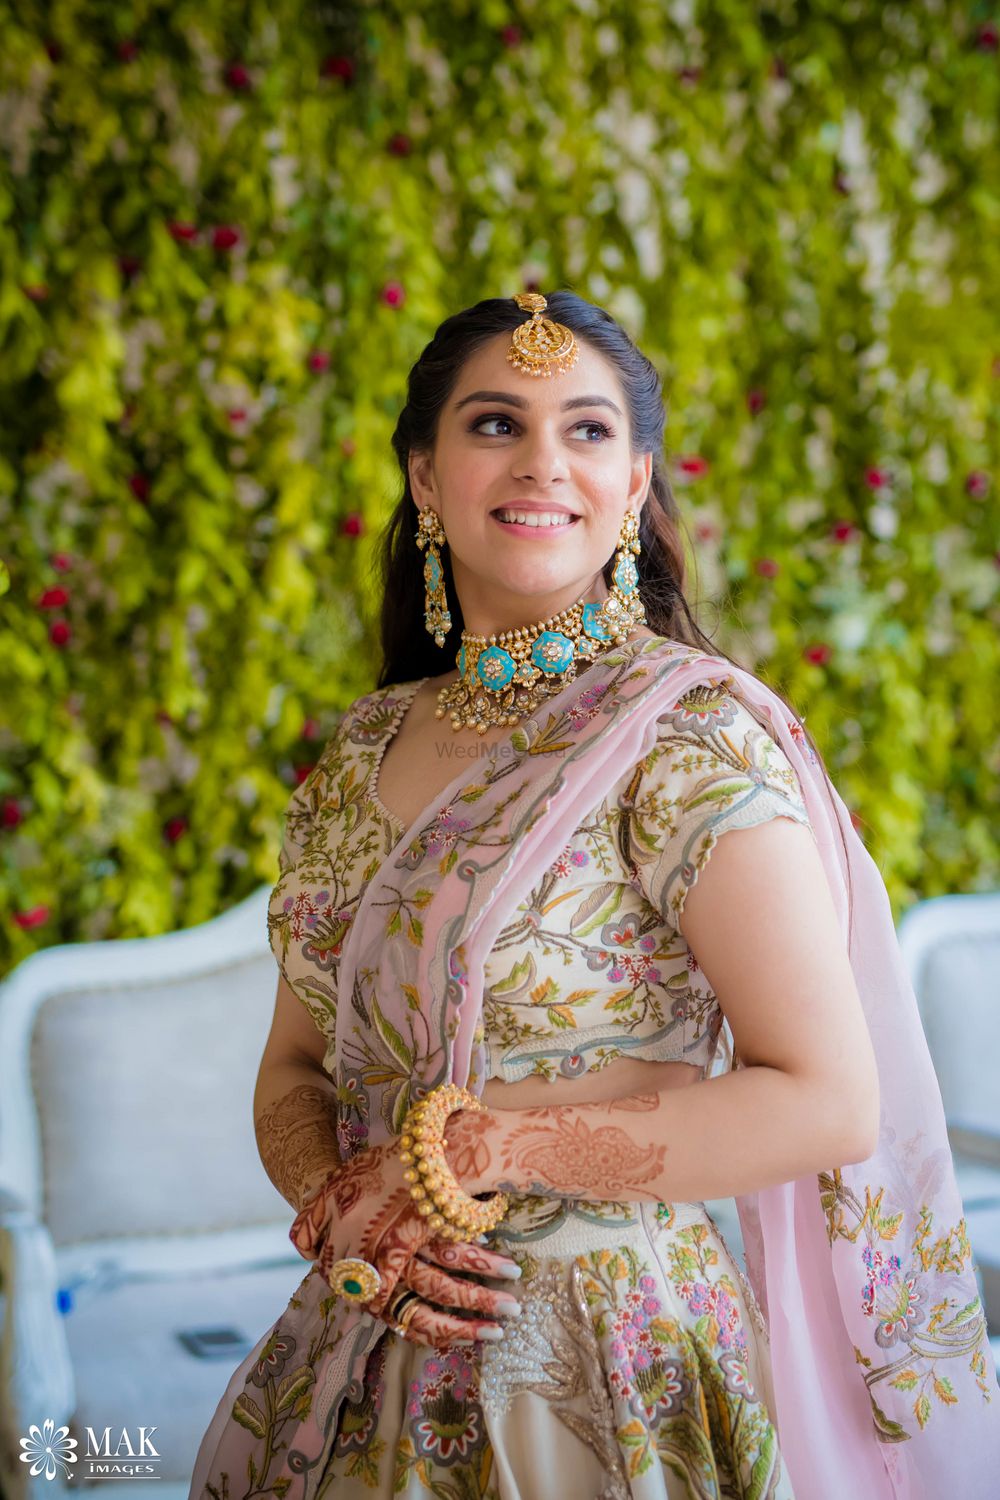 Photo of Mehendi bridal look with bright blue enamel jewellery